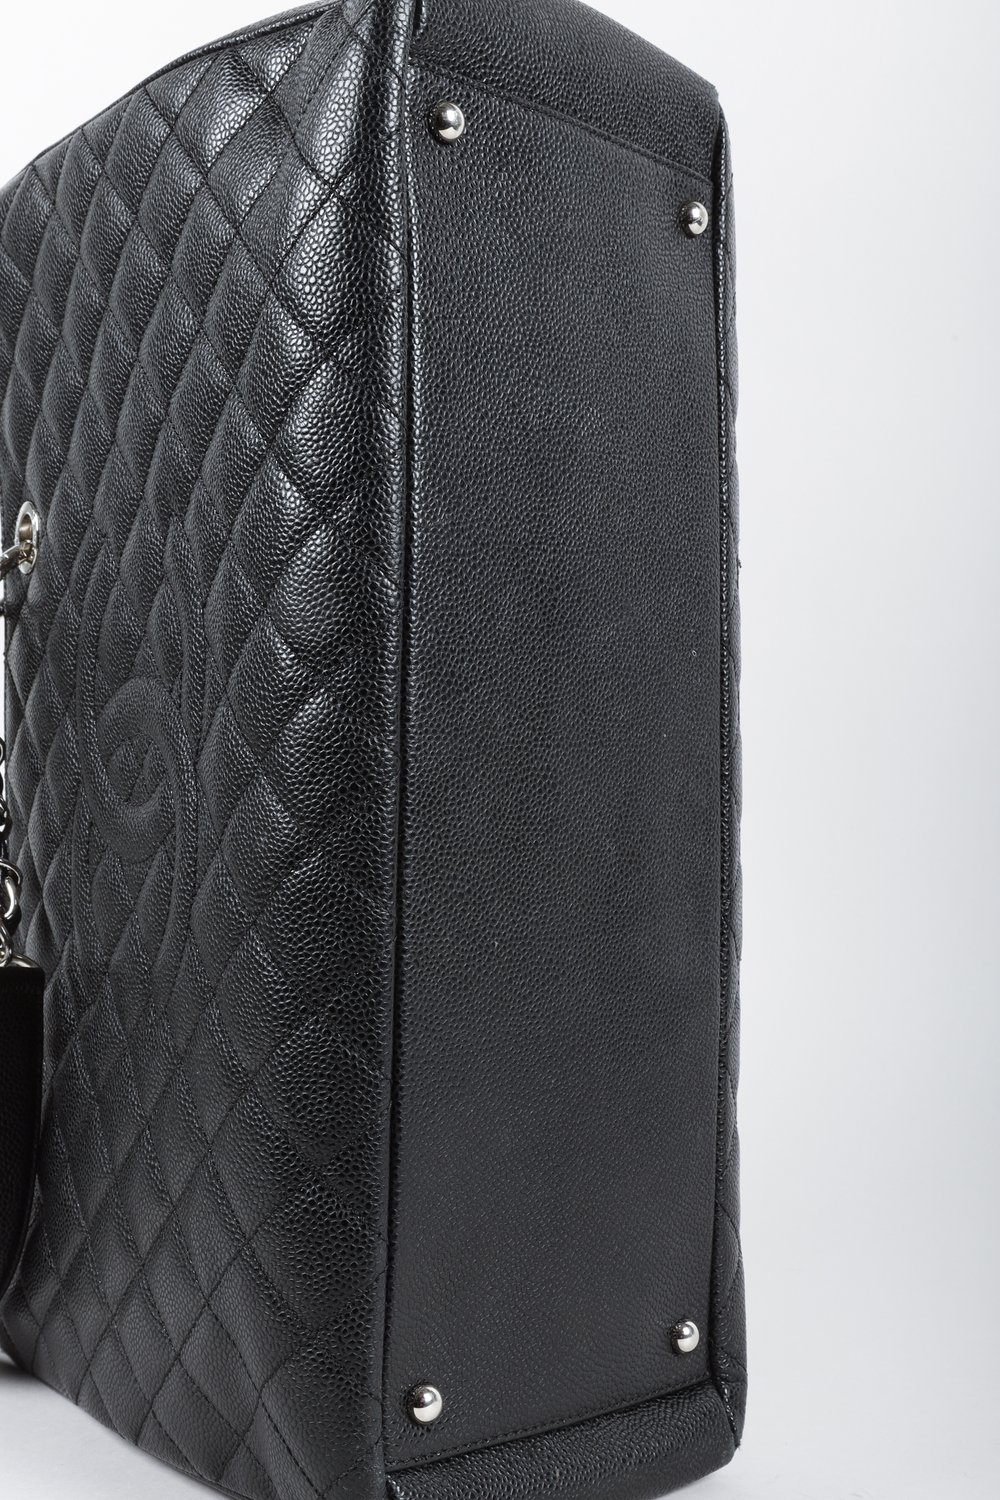 Chanel GST Grand Shopping Tote Black Caviar Bag